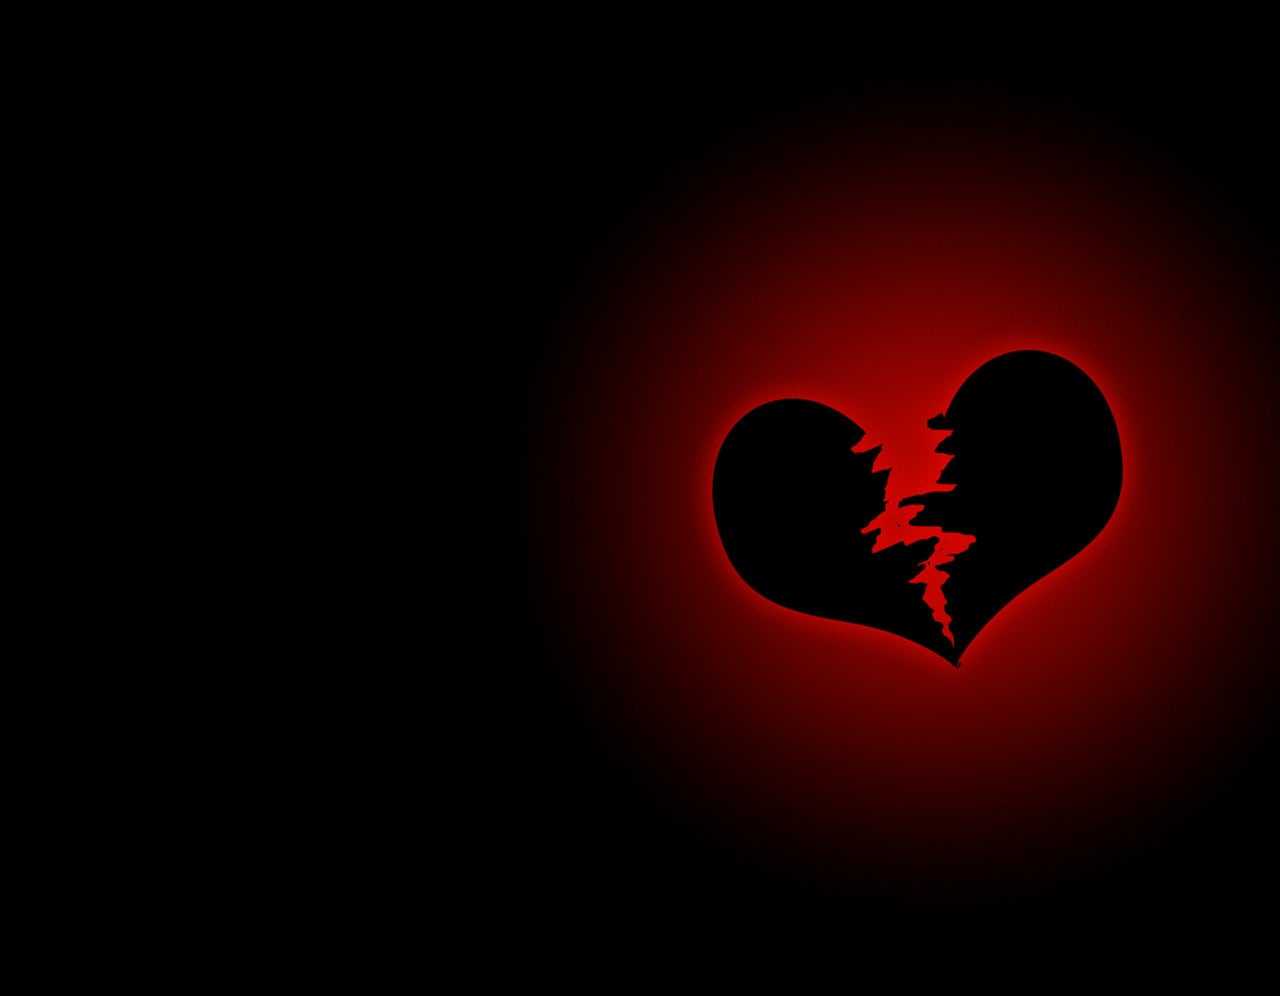 A broken heart on black background - Black heart